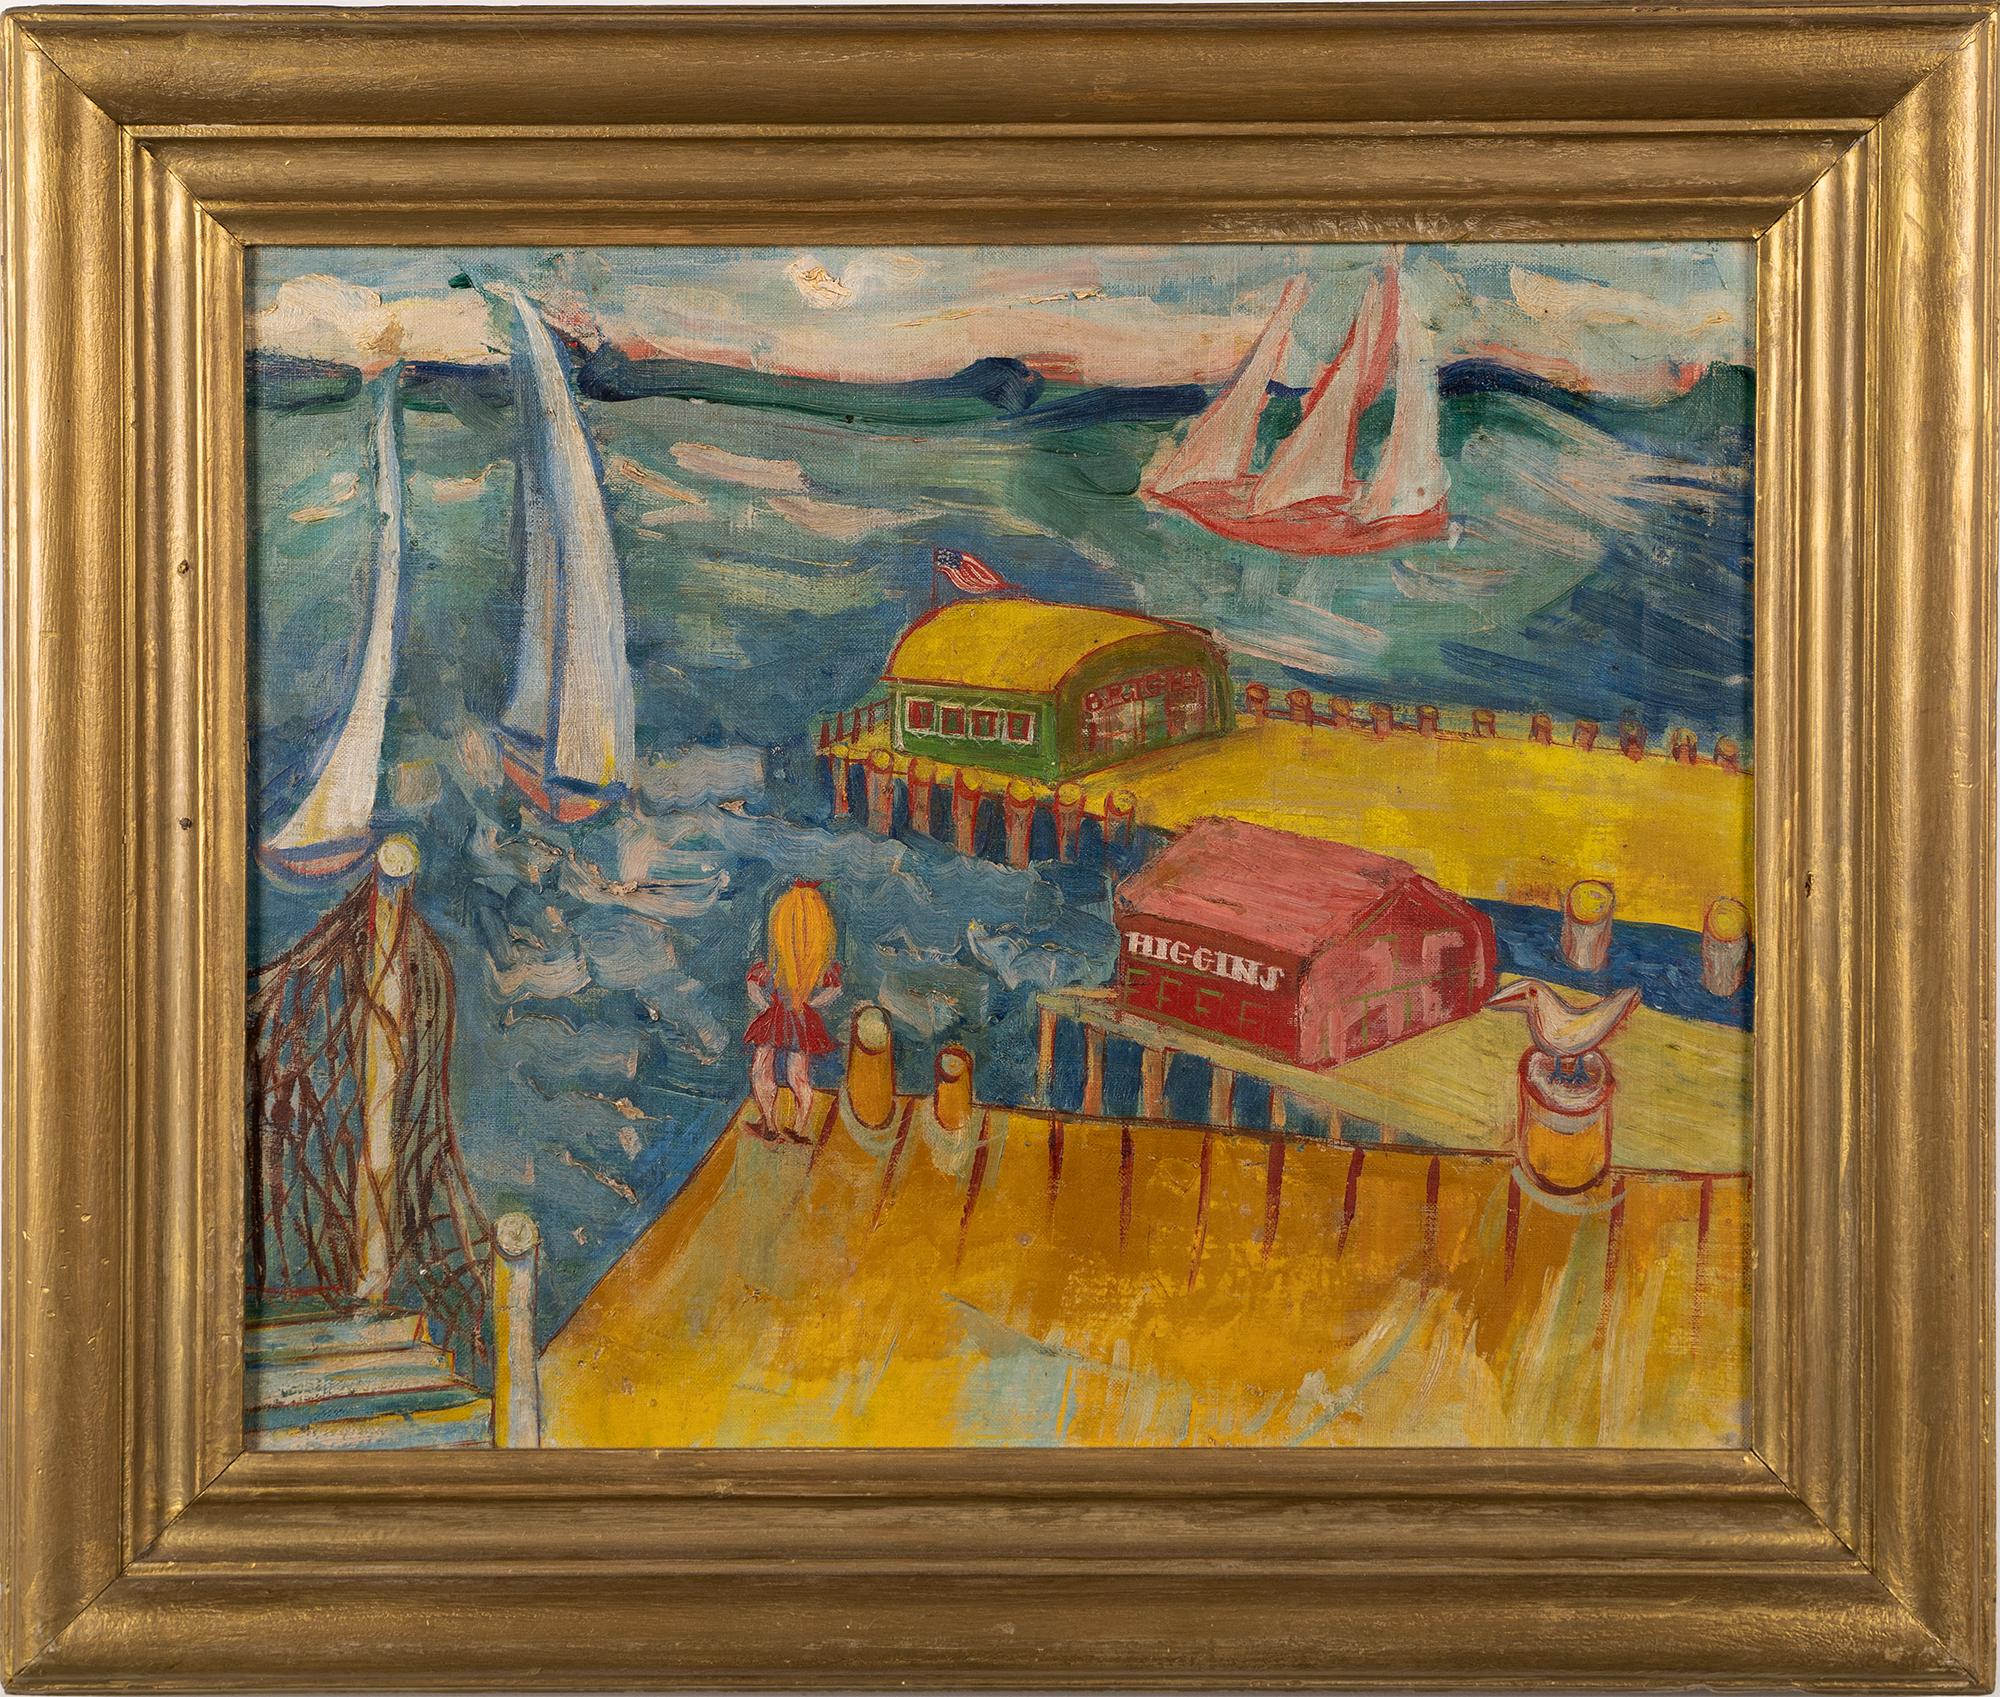 Antique American Modernist Dockside Harbor Folk Seascape Exhibited Oil Painting 